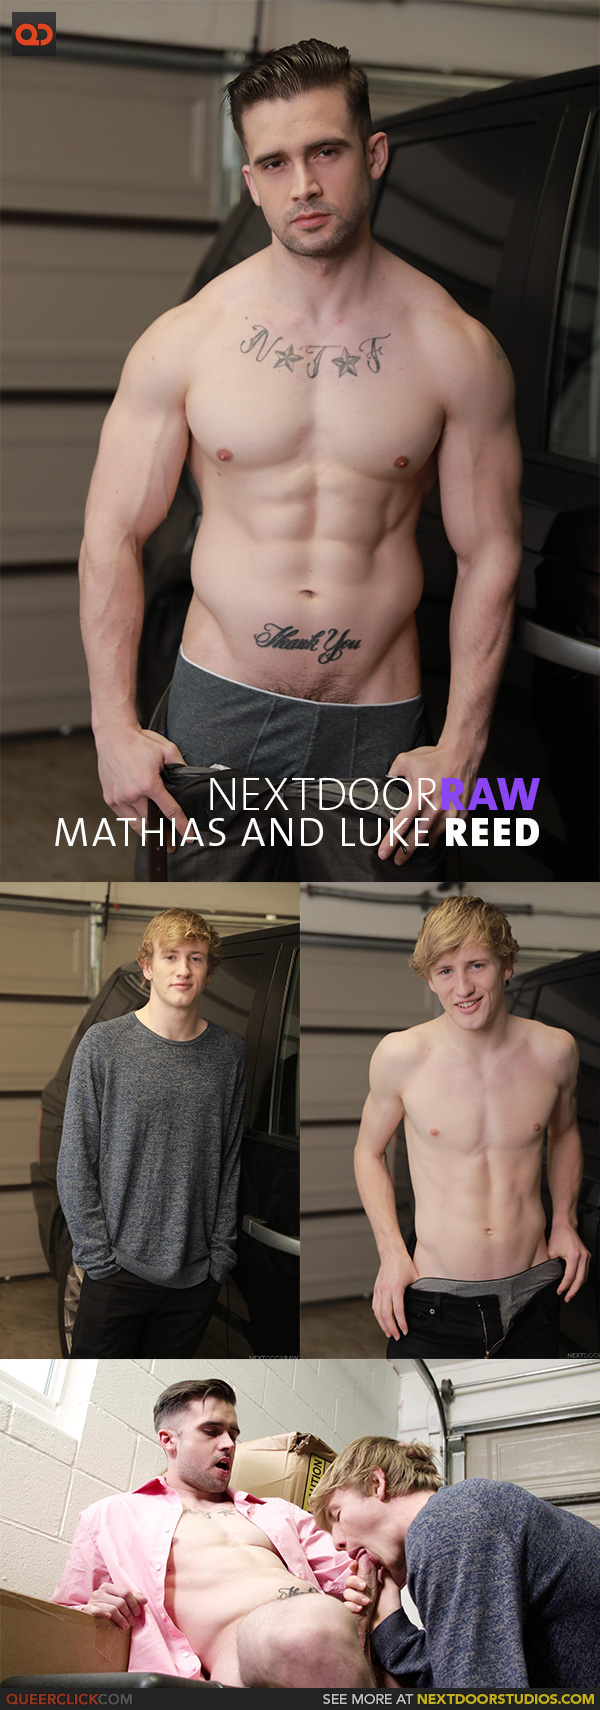 Next Door Studios:  Mathias and Luke Reed